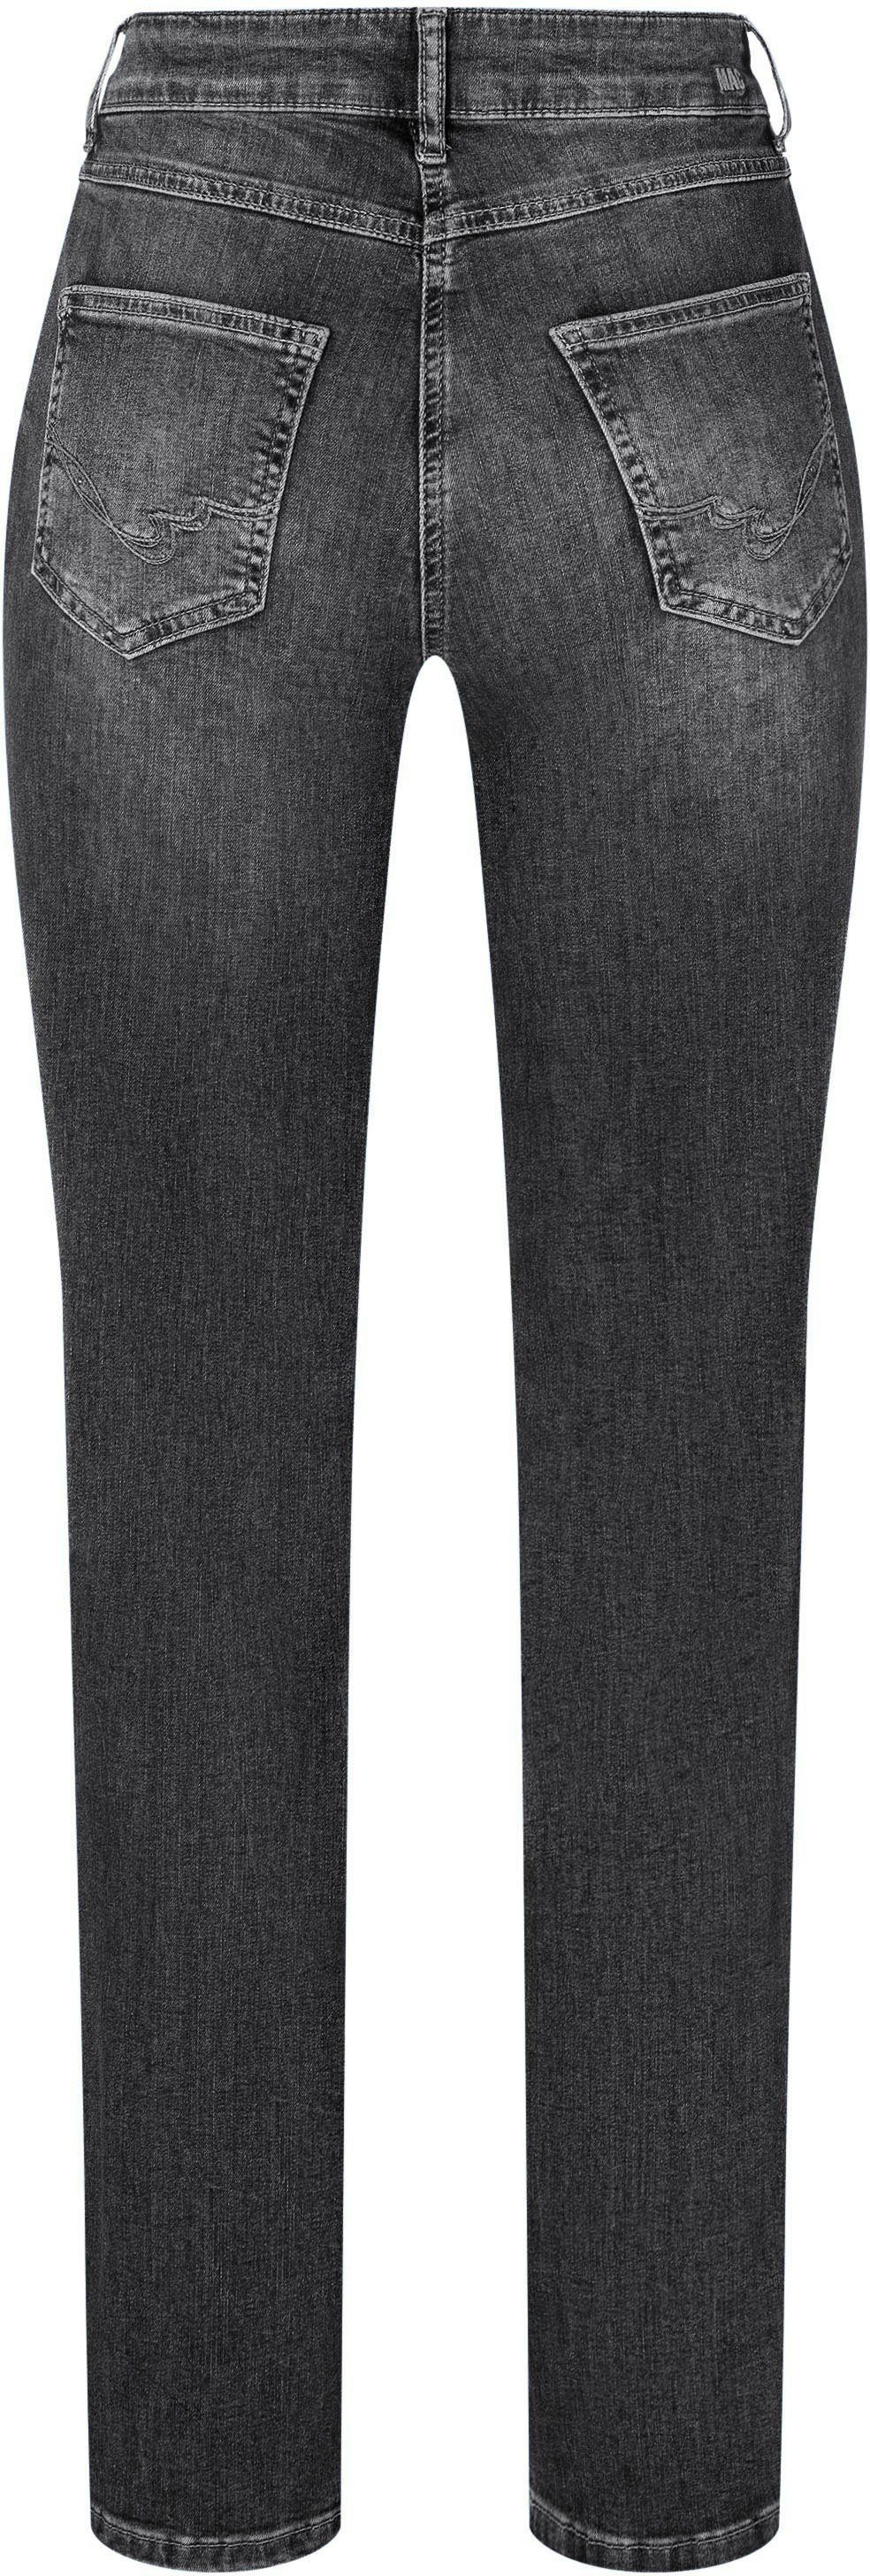 MAC 5-pocket jeans